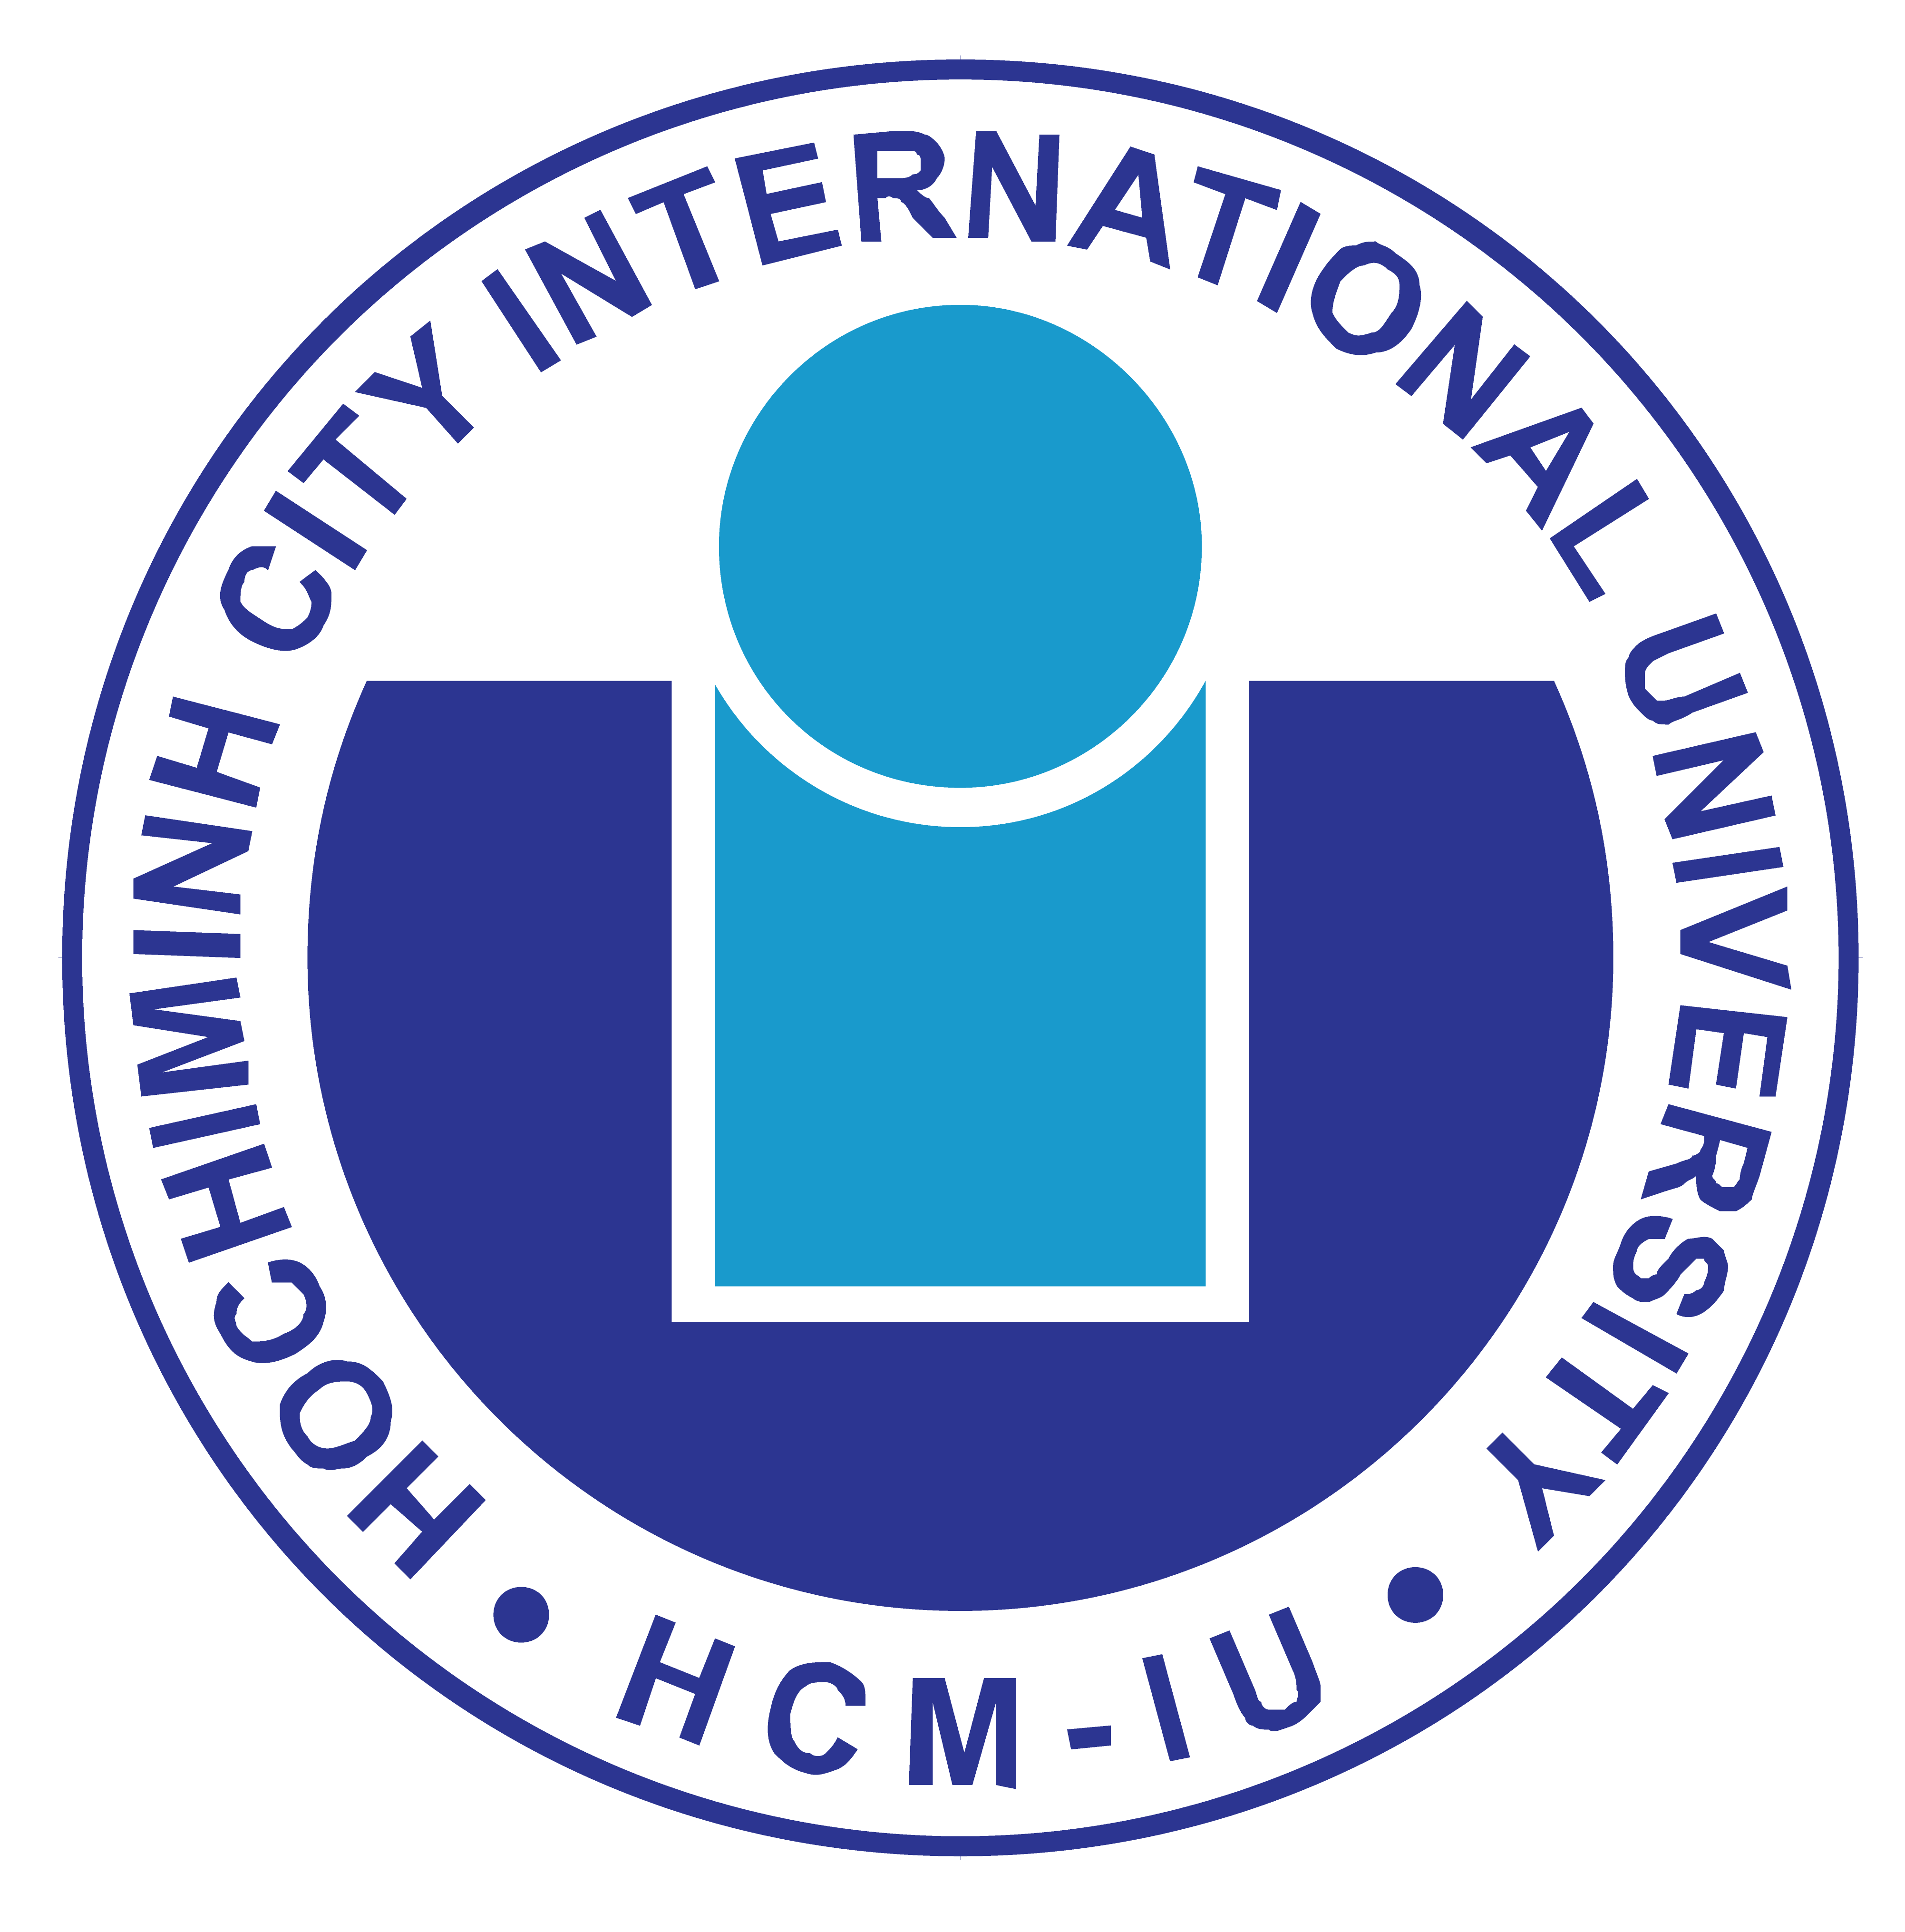 IU University Logo - International University - Download logo